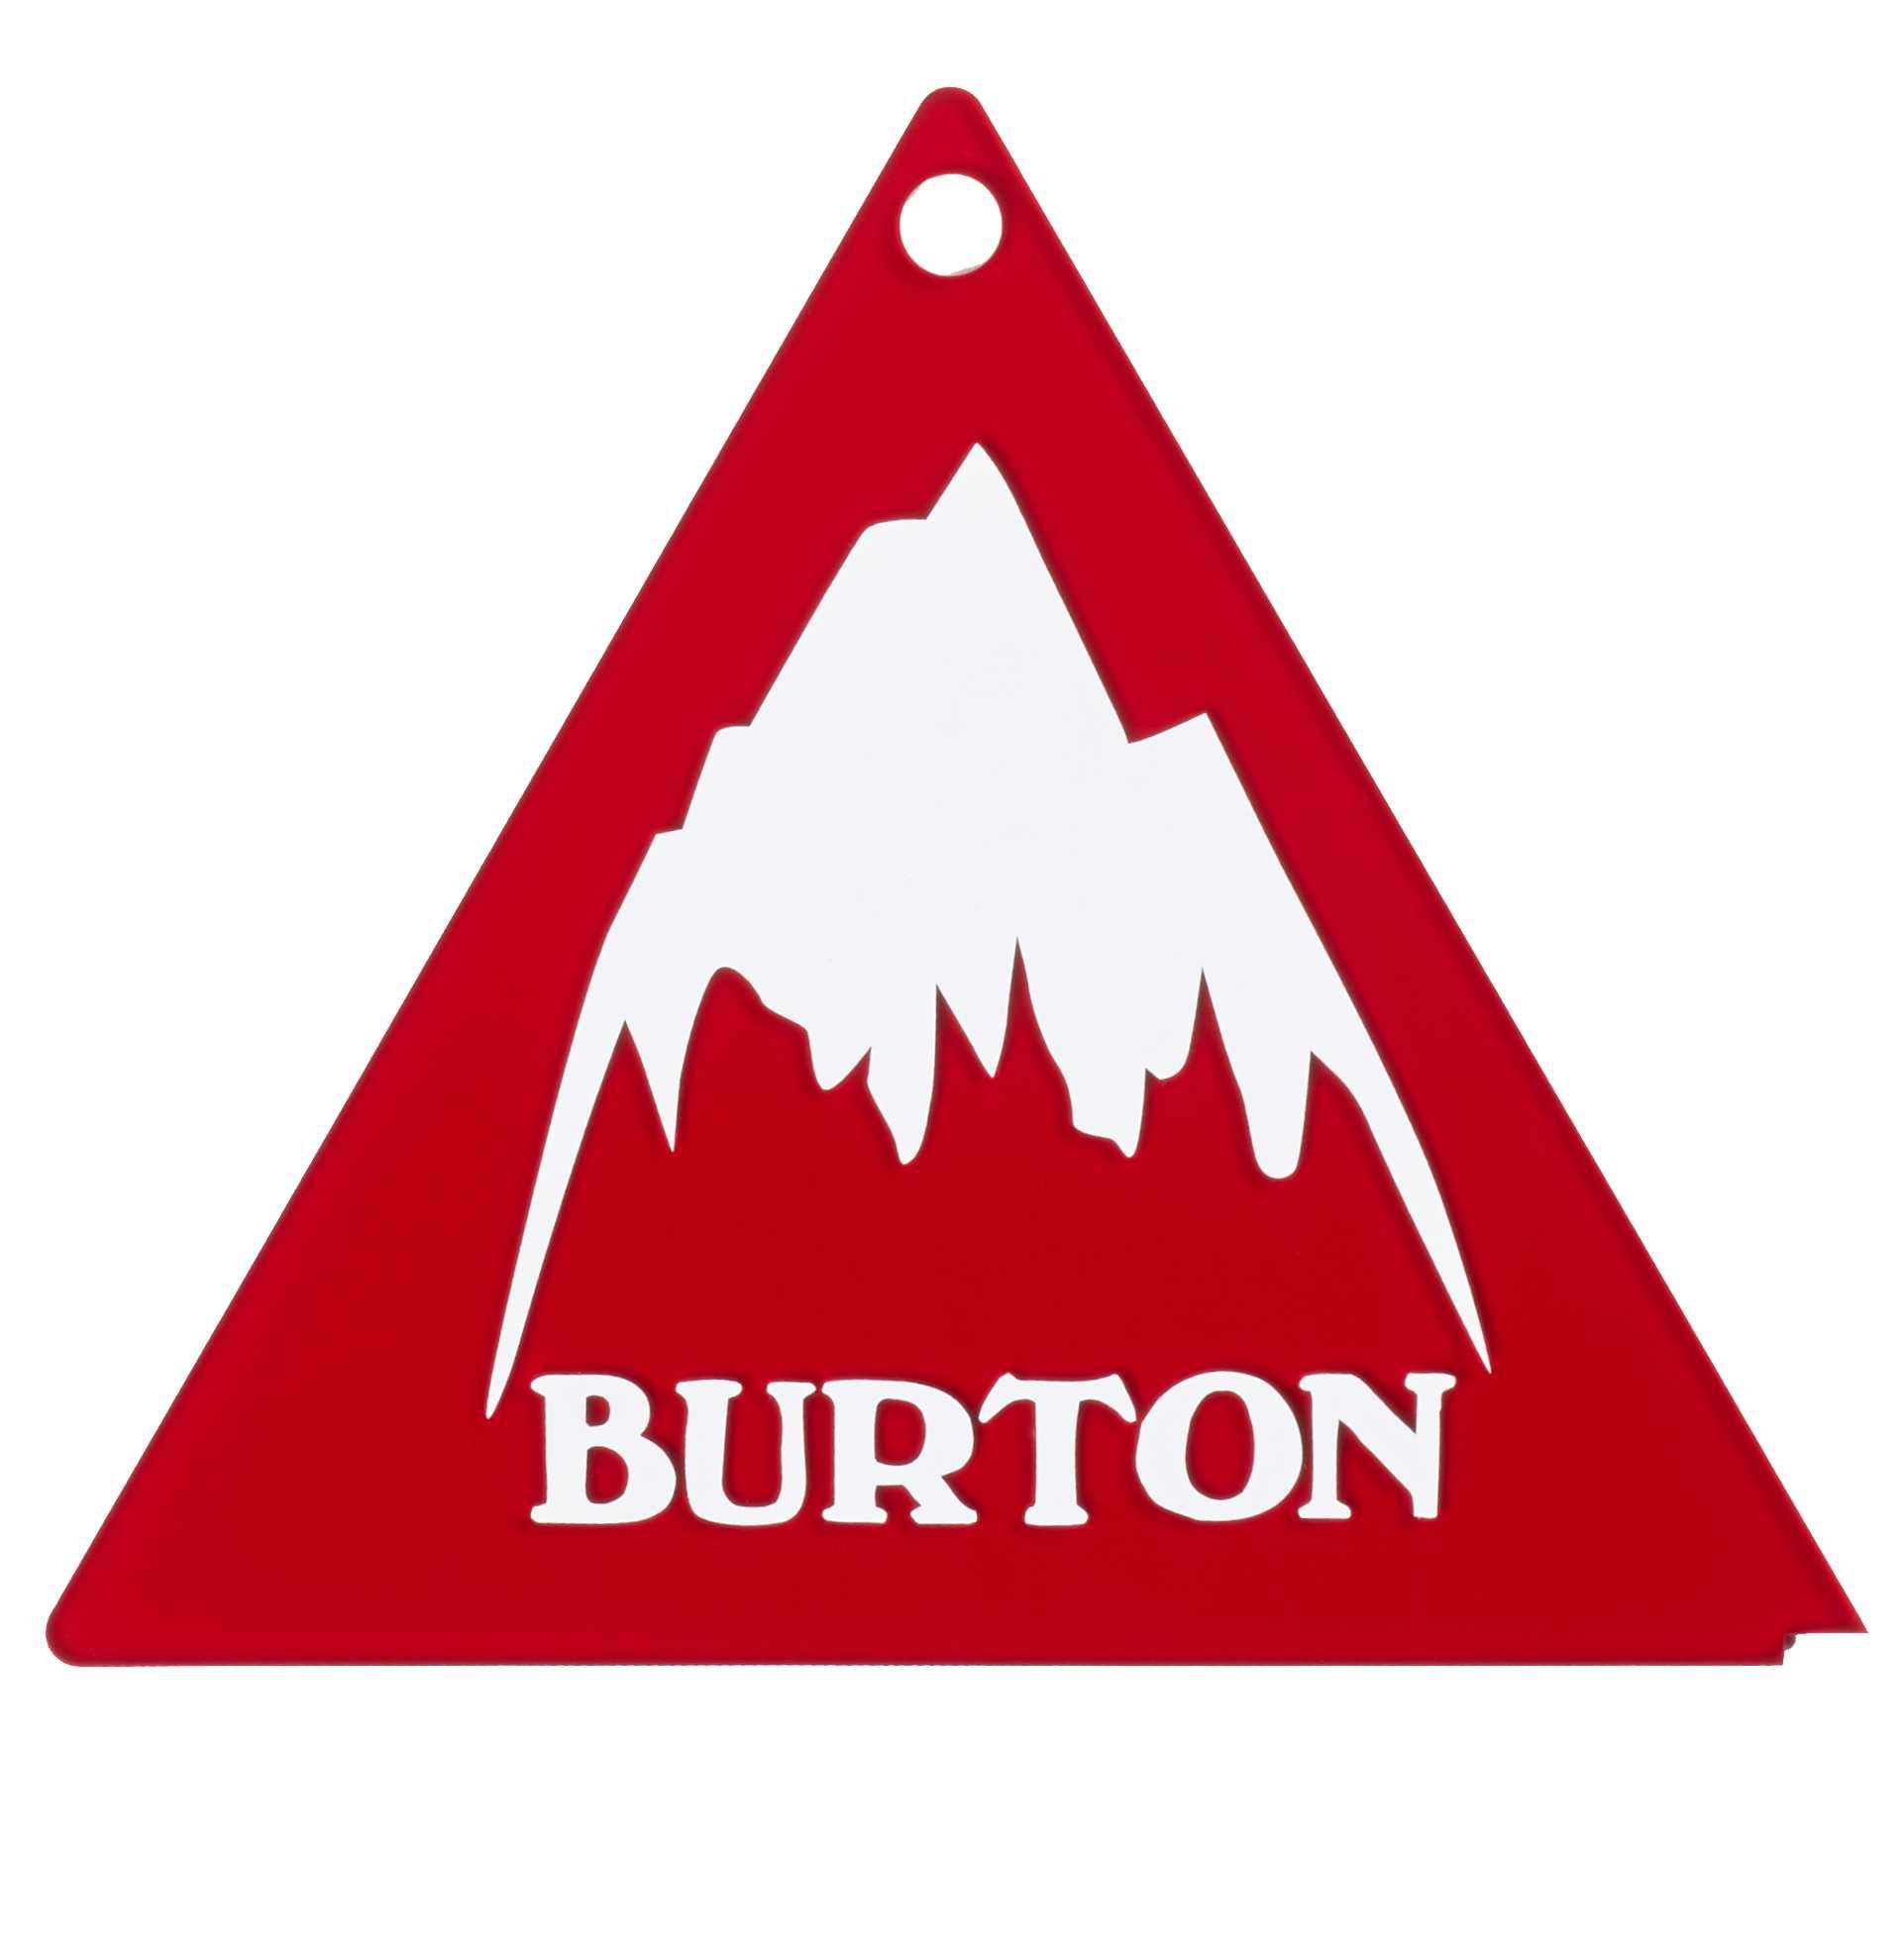 Burton Tri Craper